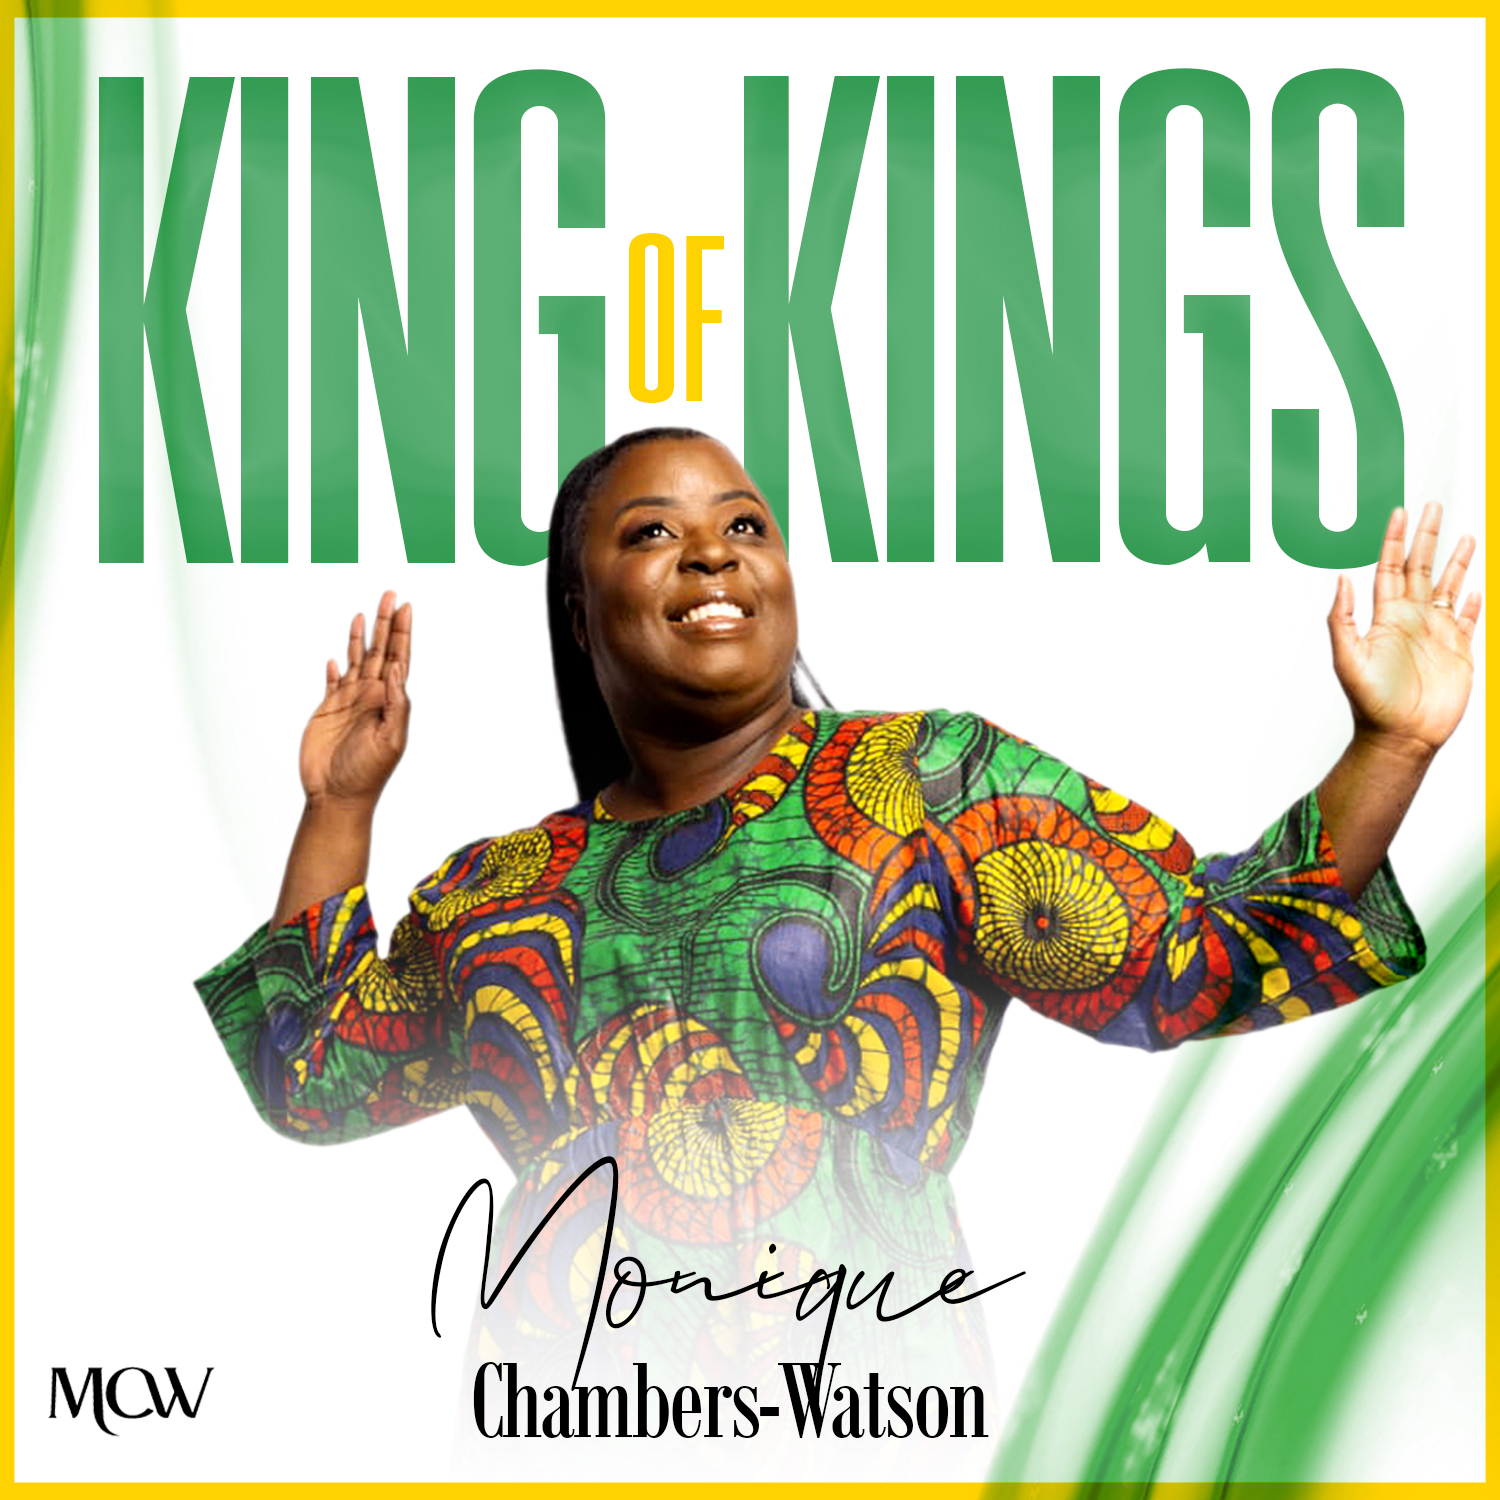 "King of Kings" cover art - Monique Chambers-Watson